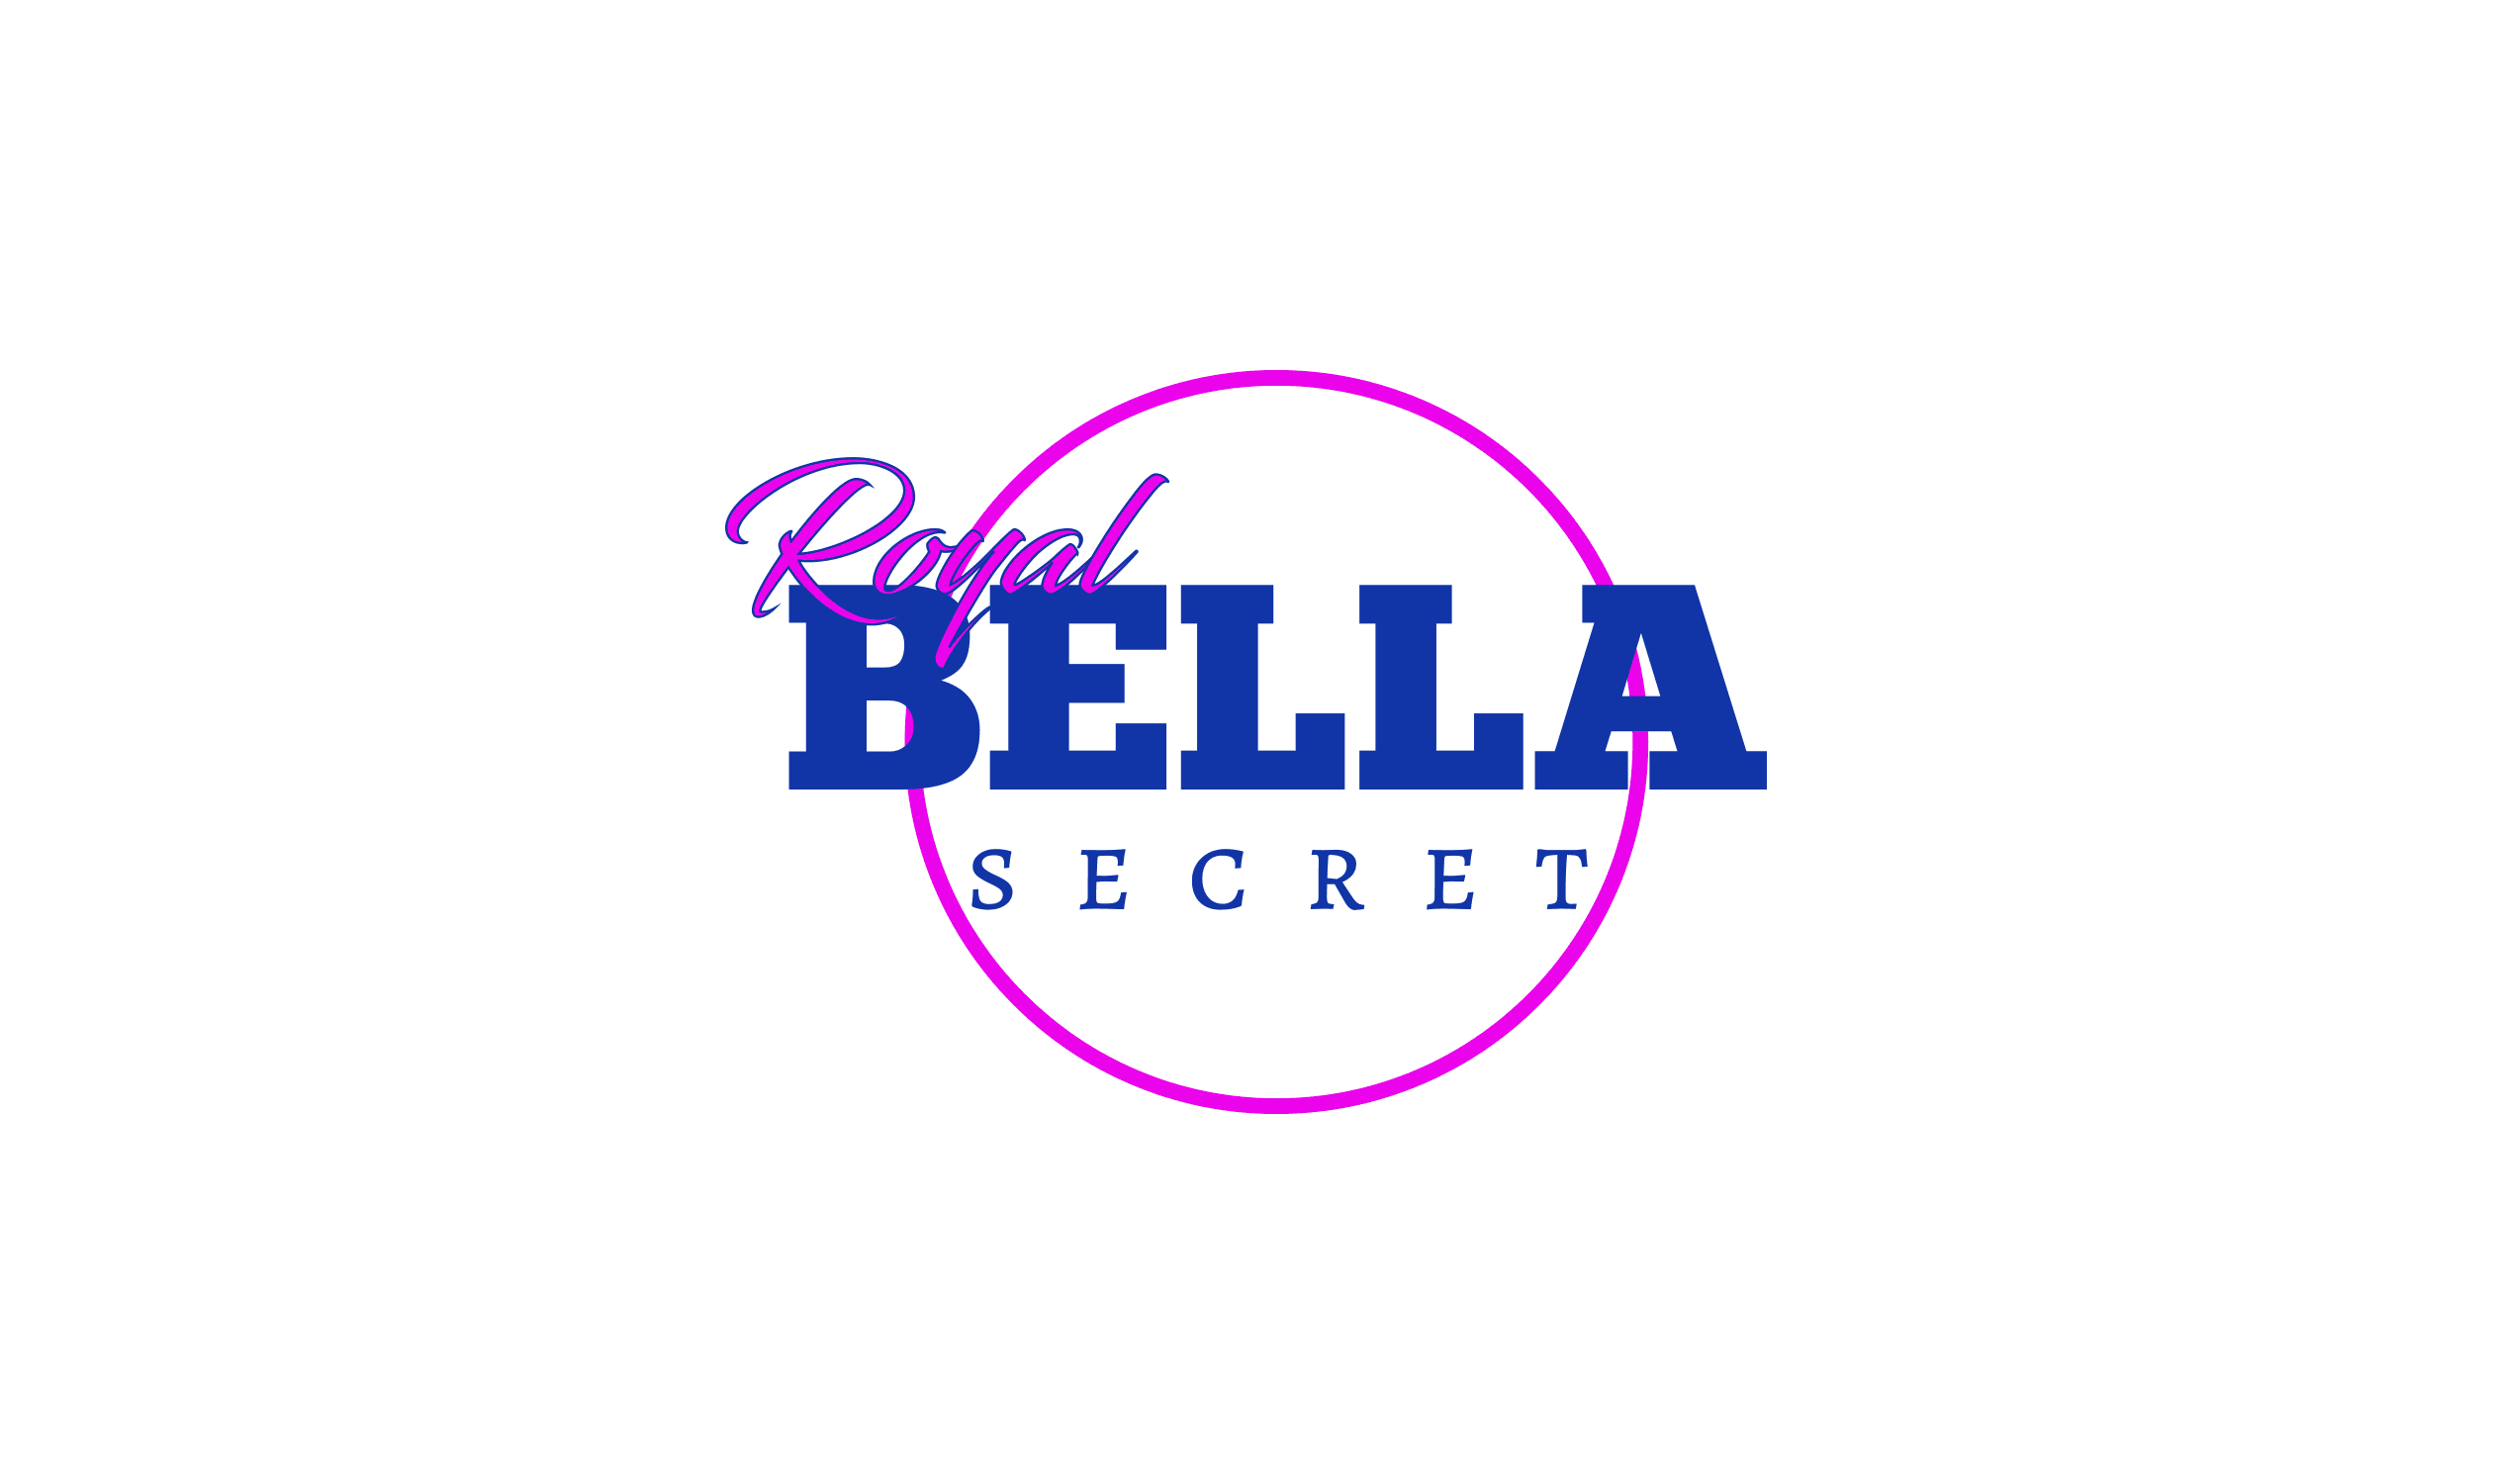 Royal Bella Secrets